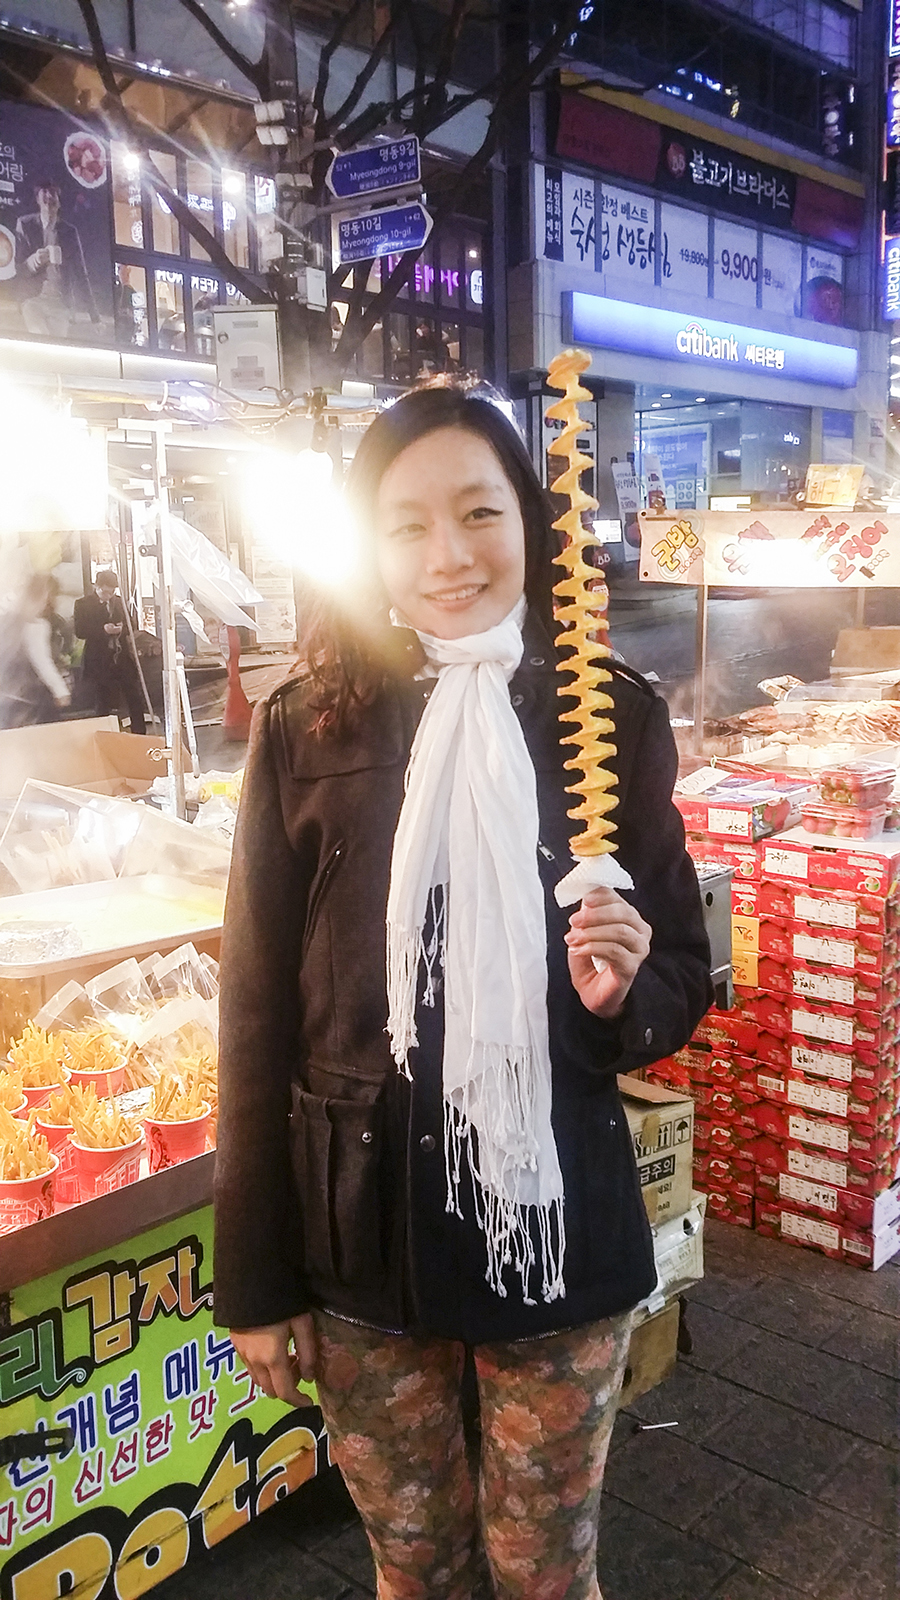 Me with a twistie potato stick in Myeongdong, Seoul, South Korea.